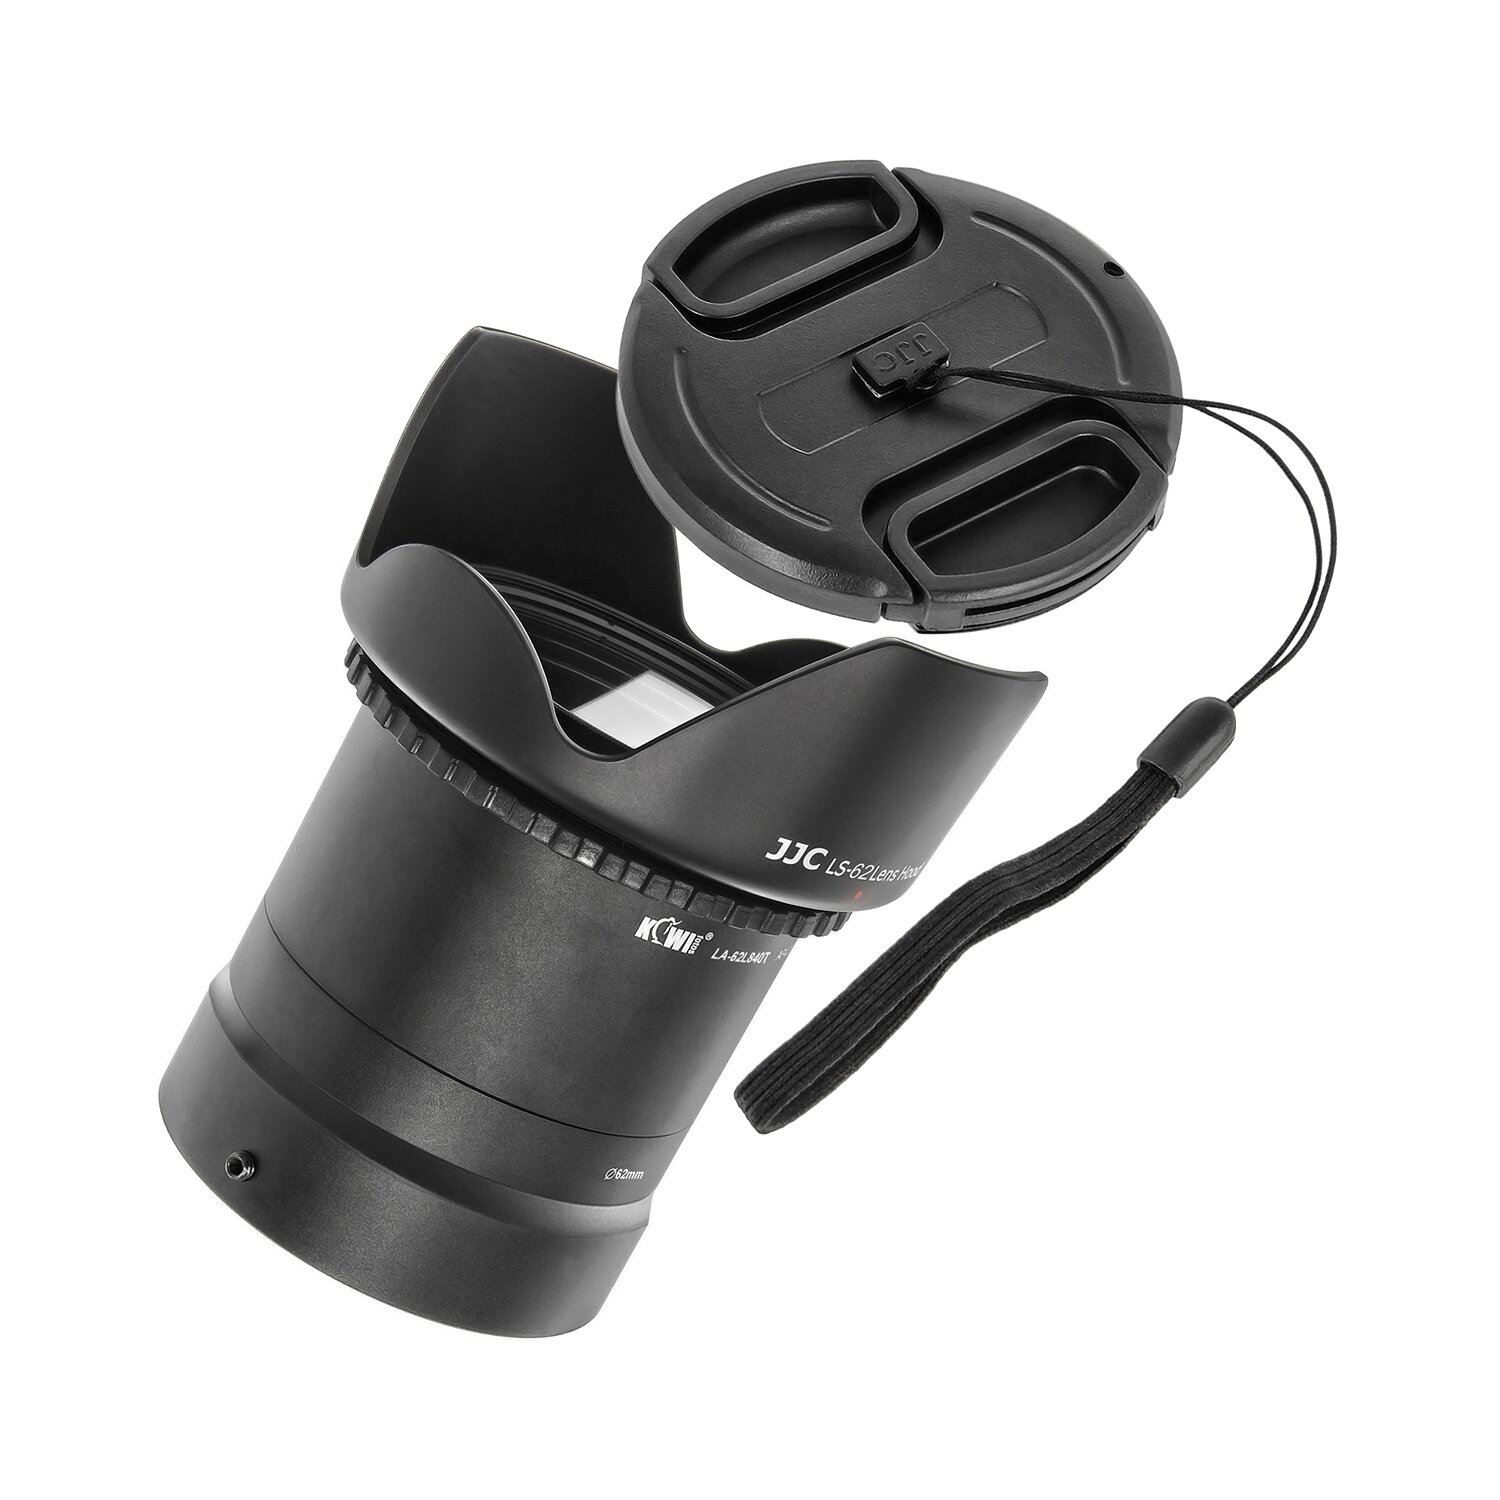 KIWIFOTOS Objektiv Zubehörset - 6 teilig - kompatibel für Nikon Coolpix L840 beeinhaltet Objektivadapter mit 62mm, UV Filter, Polarisationsfilter, Sonnenblende,